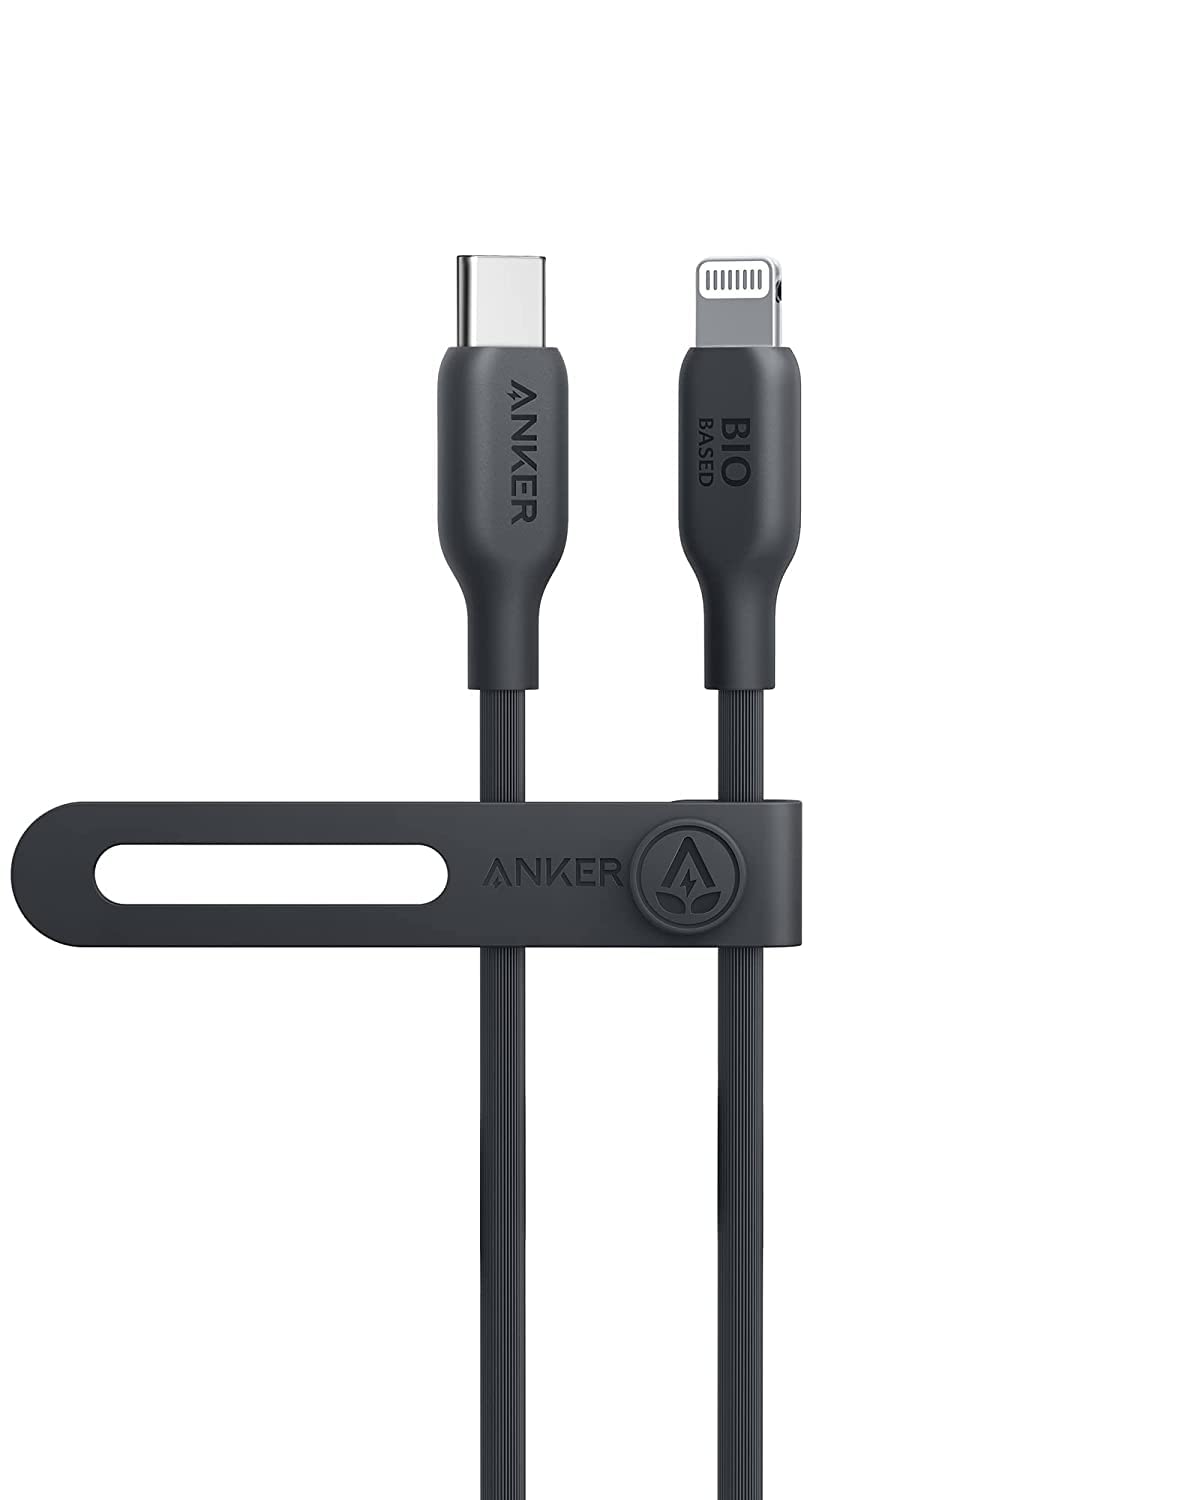 Anker 542 USB-C to Lightning Cable (Bio-Based 3ft) - Black